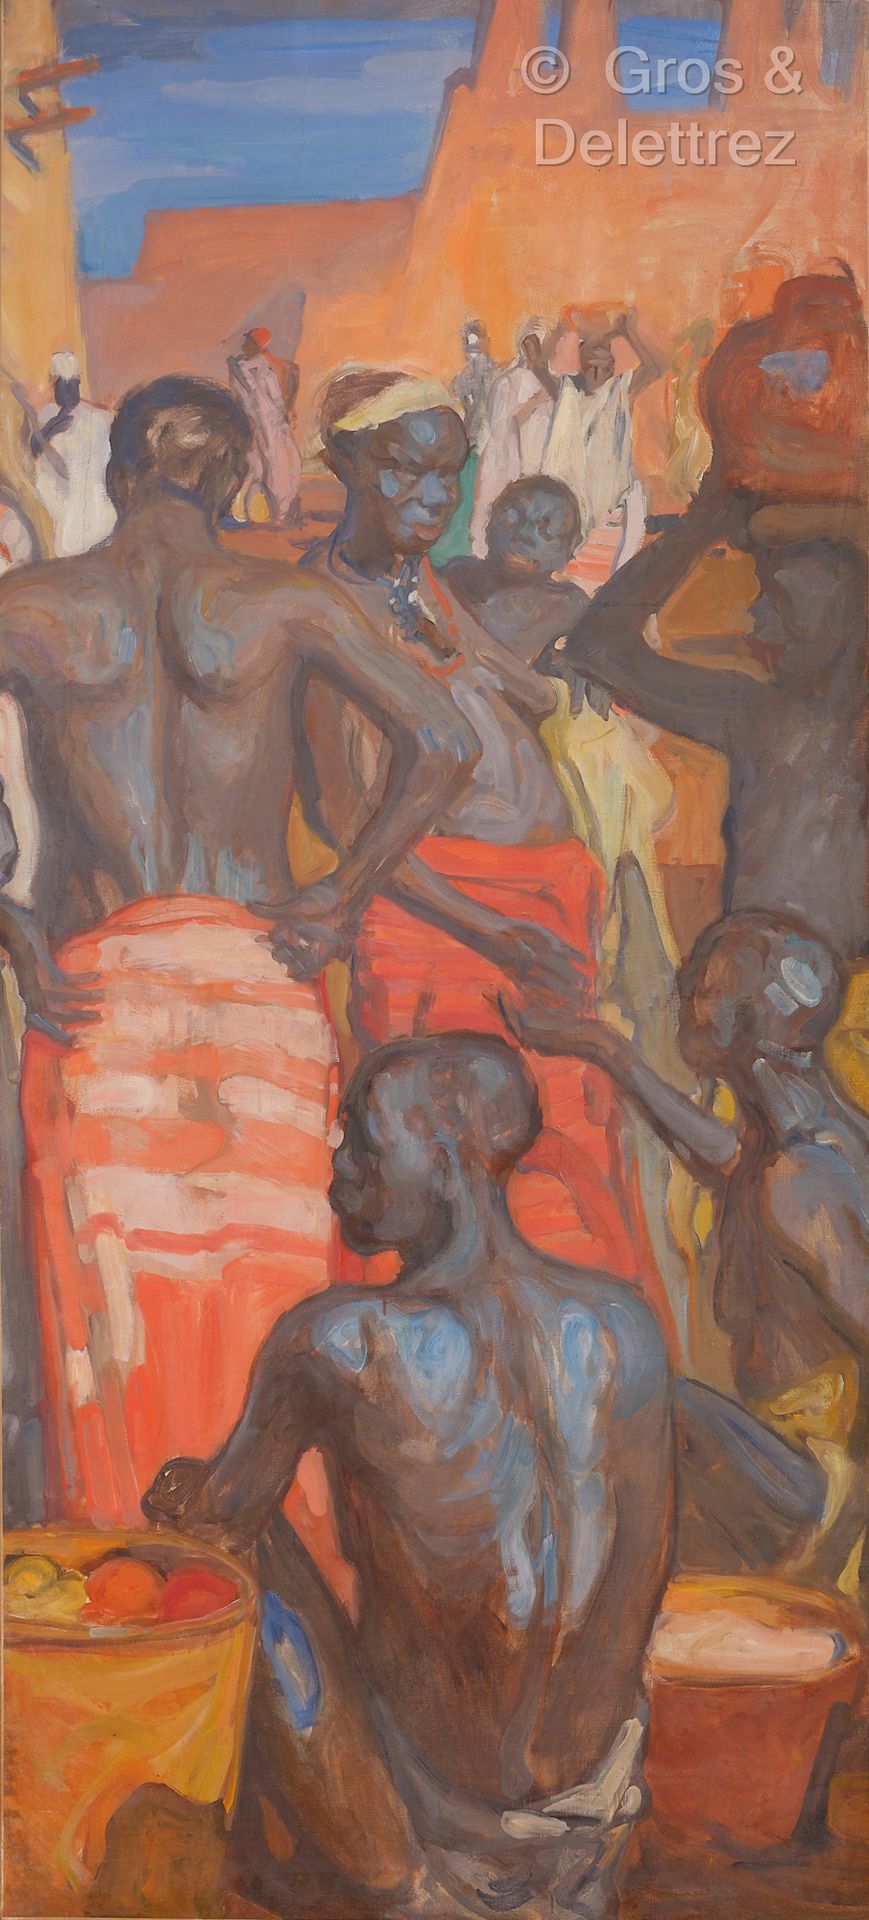 Charles FOUQUERAY (1869-1956) 非洲人物（大型作品《图阿雷格酋长阿梅诺卡尔》的片段）

布面油画。

200 x 94 cm

左边&hellip;